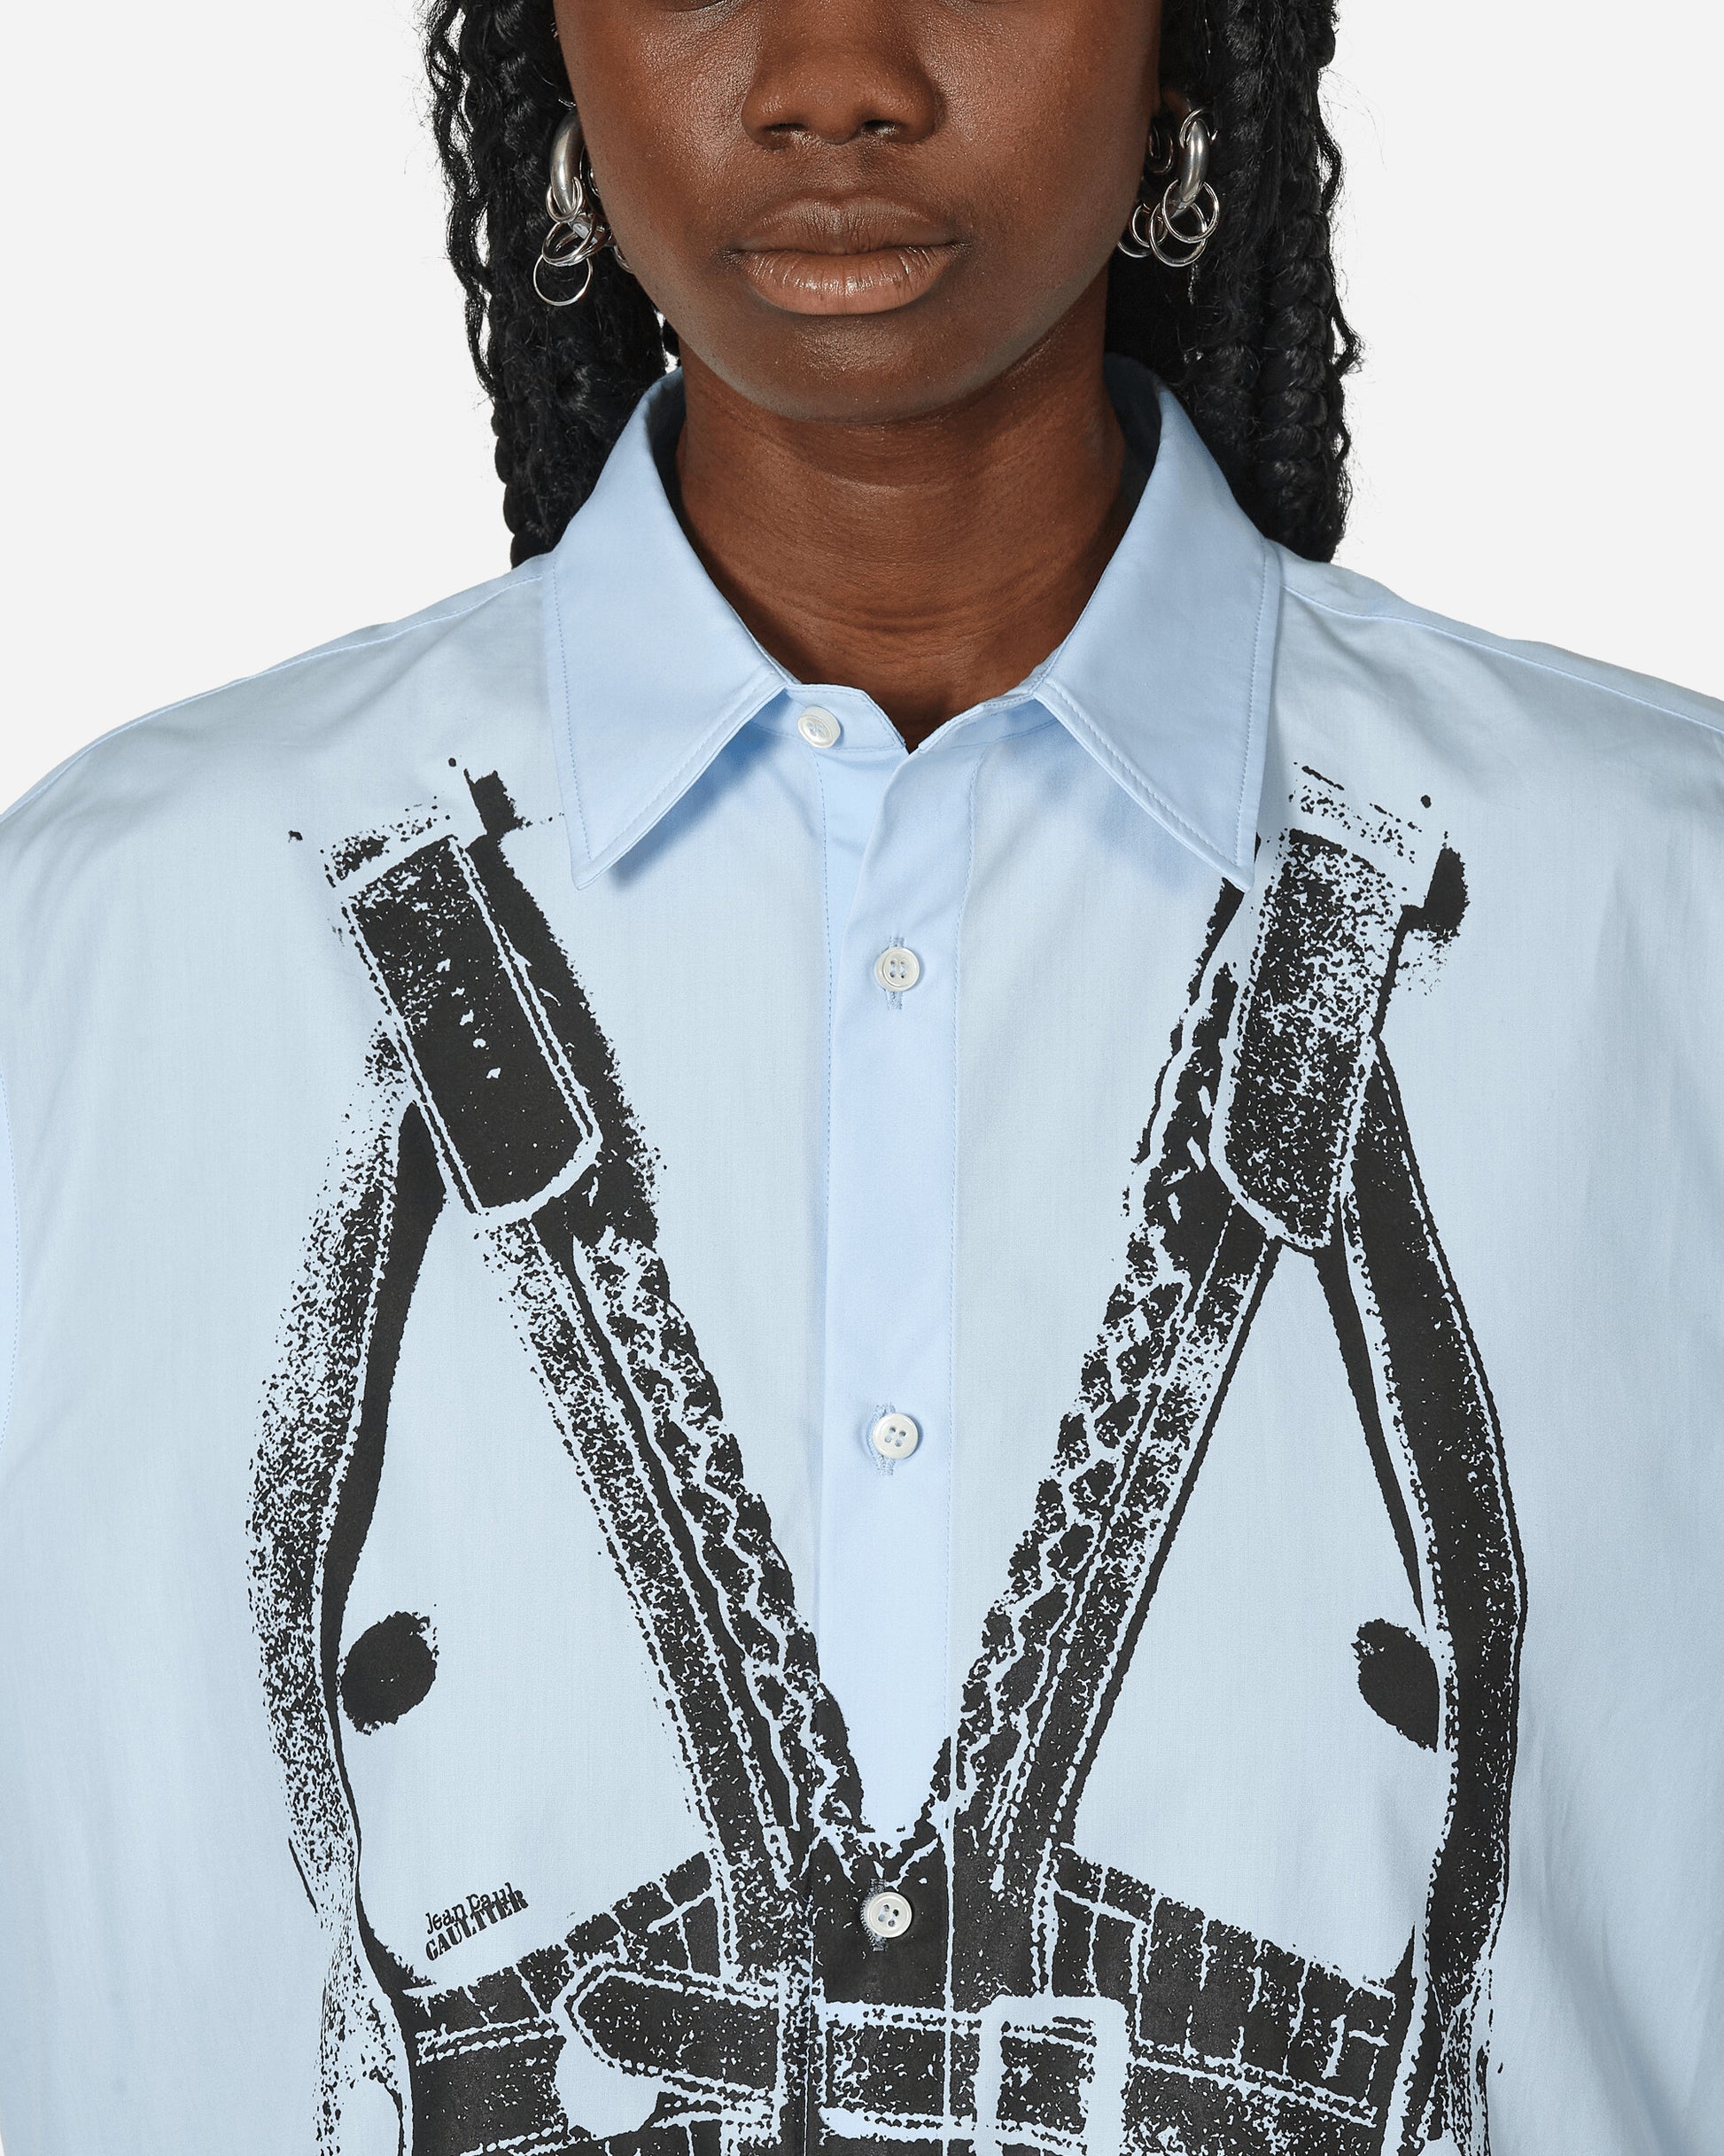 Jean Paul Gaultier Wmns Popeline Shirt Printedmadonna Trompe L'Oeil Babyblue/Black Shirts Longsleeve Shirt F-CH027I-C045 5200